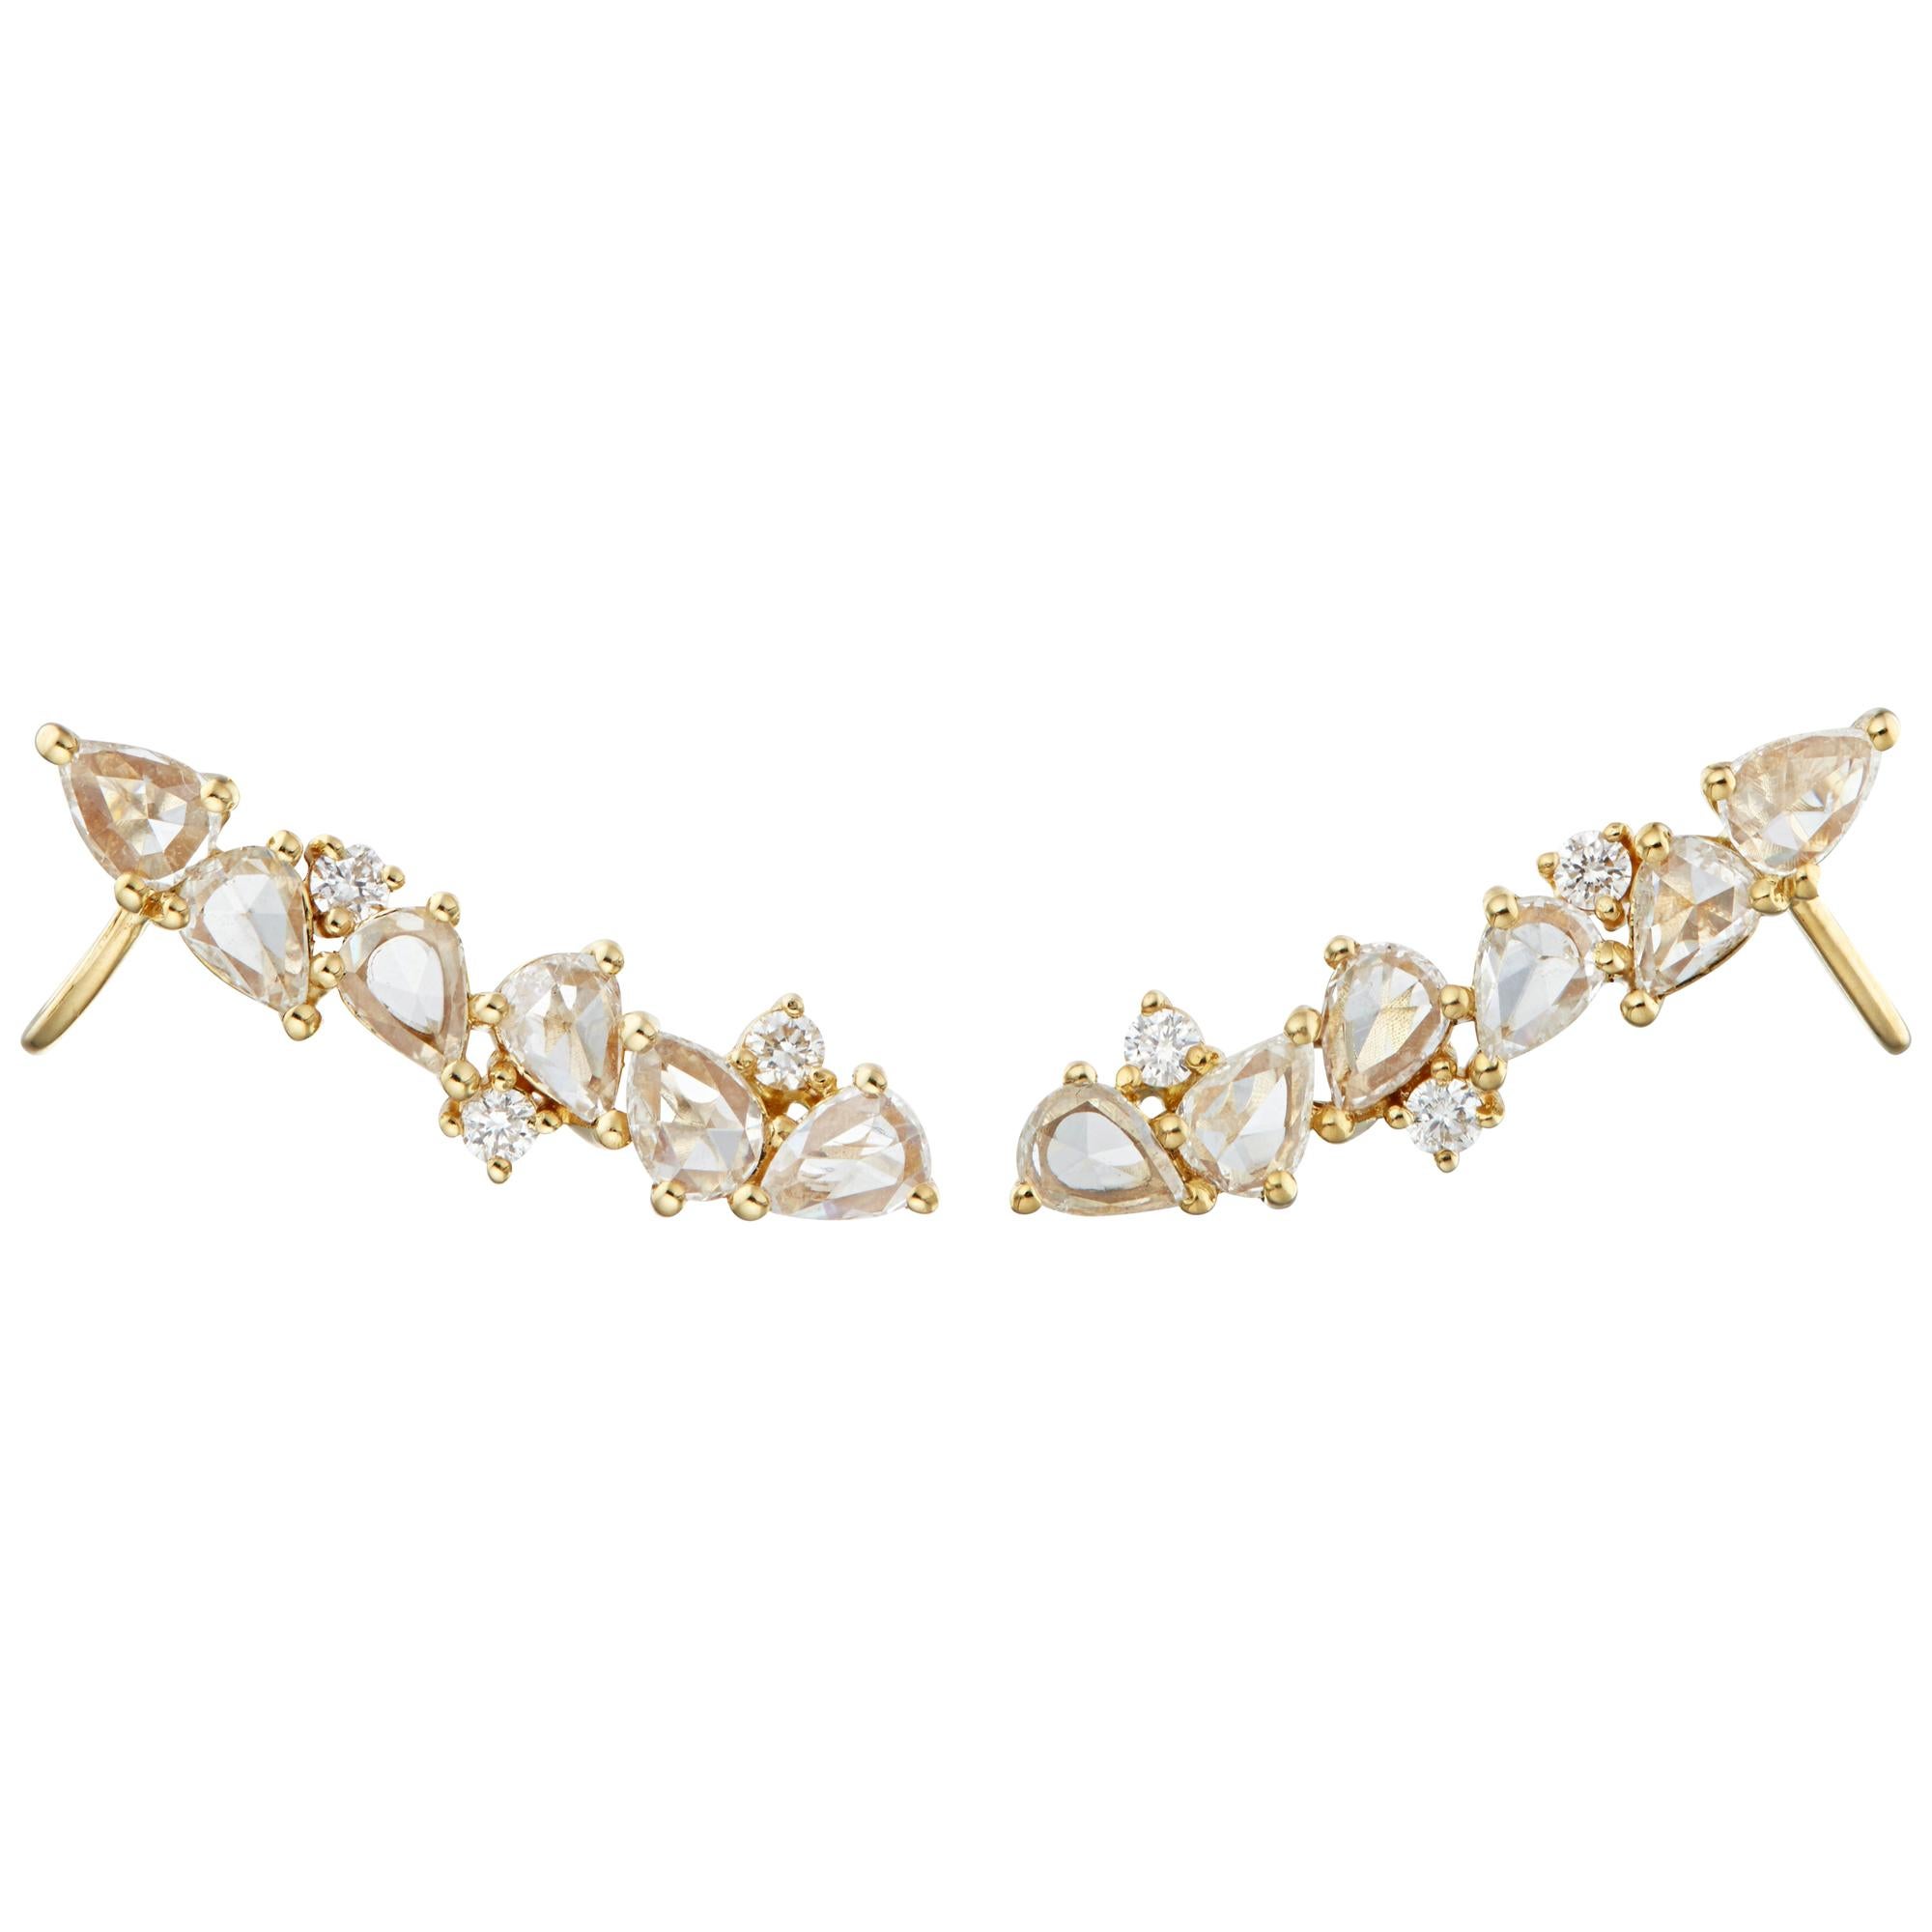 Manpriya B Fancy Rose-Cut and White Diamond 18K Gold Ear Climber Cuff Earrings For Sale